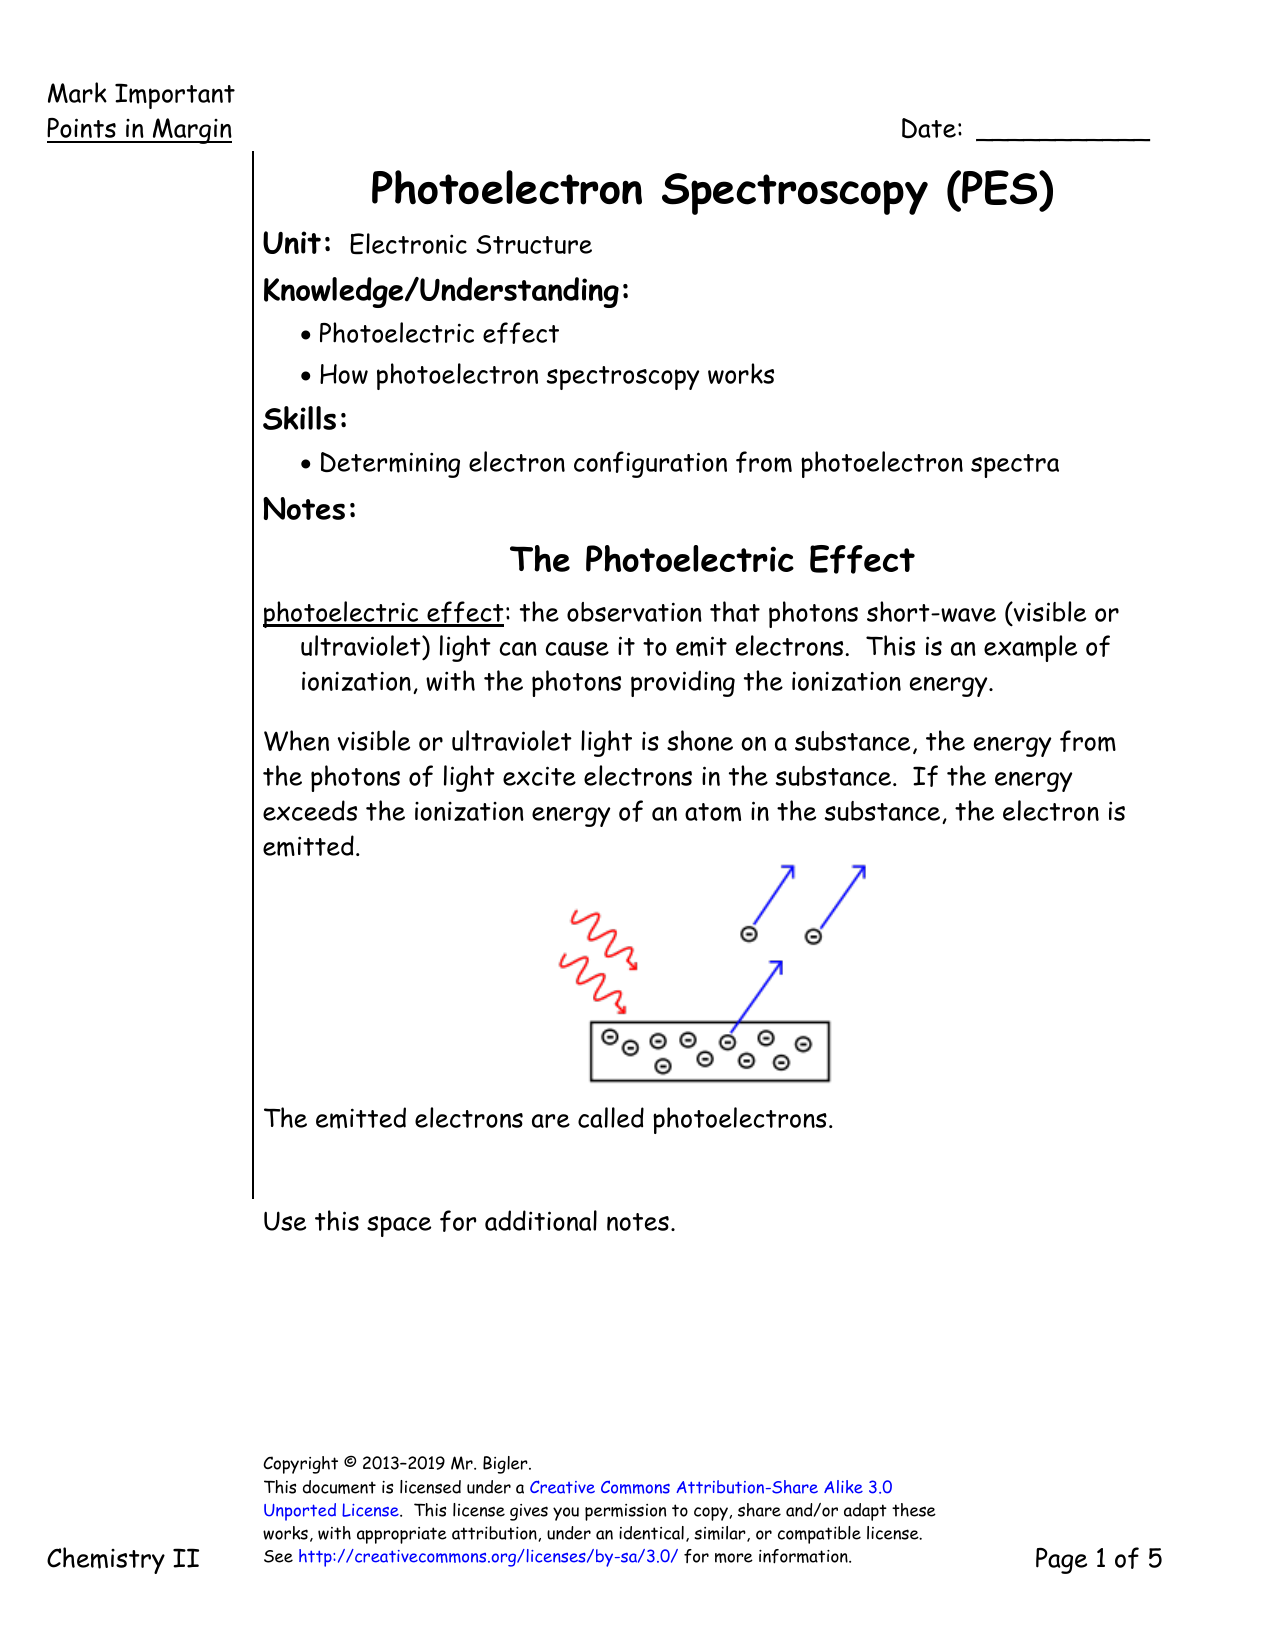 Photoelectron-Spectroscopy With Regard To Photoelectron Spectroscopy Worksheet Answers